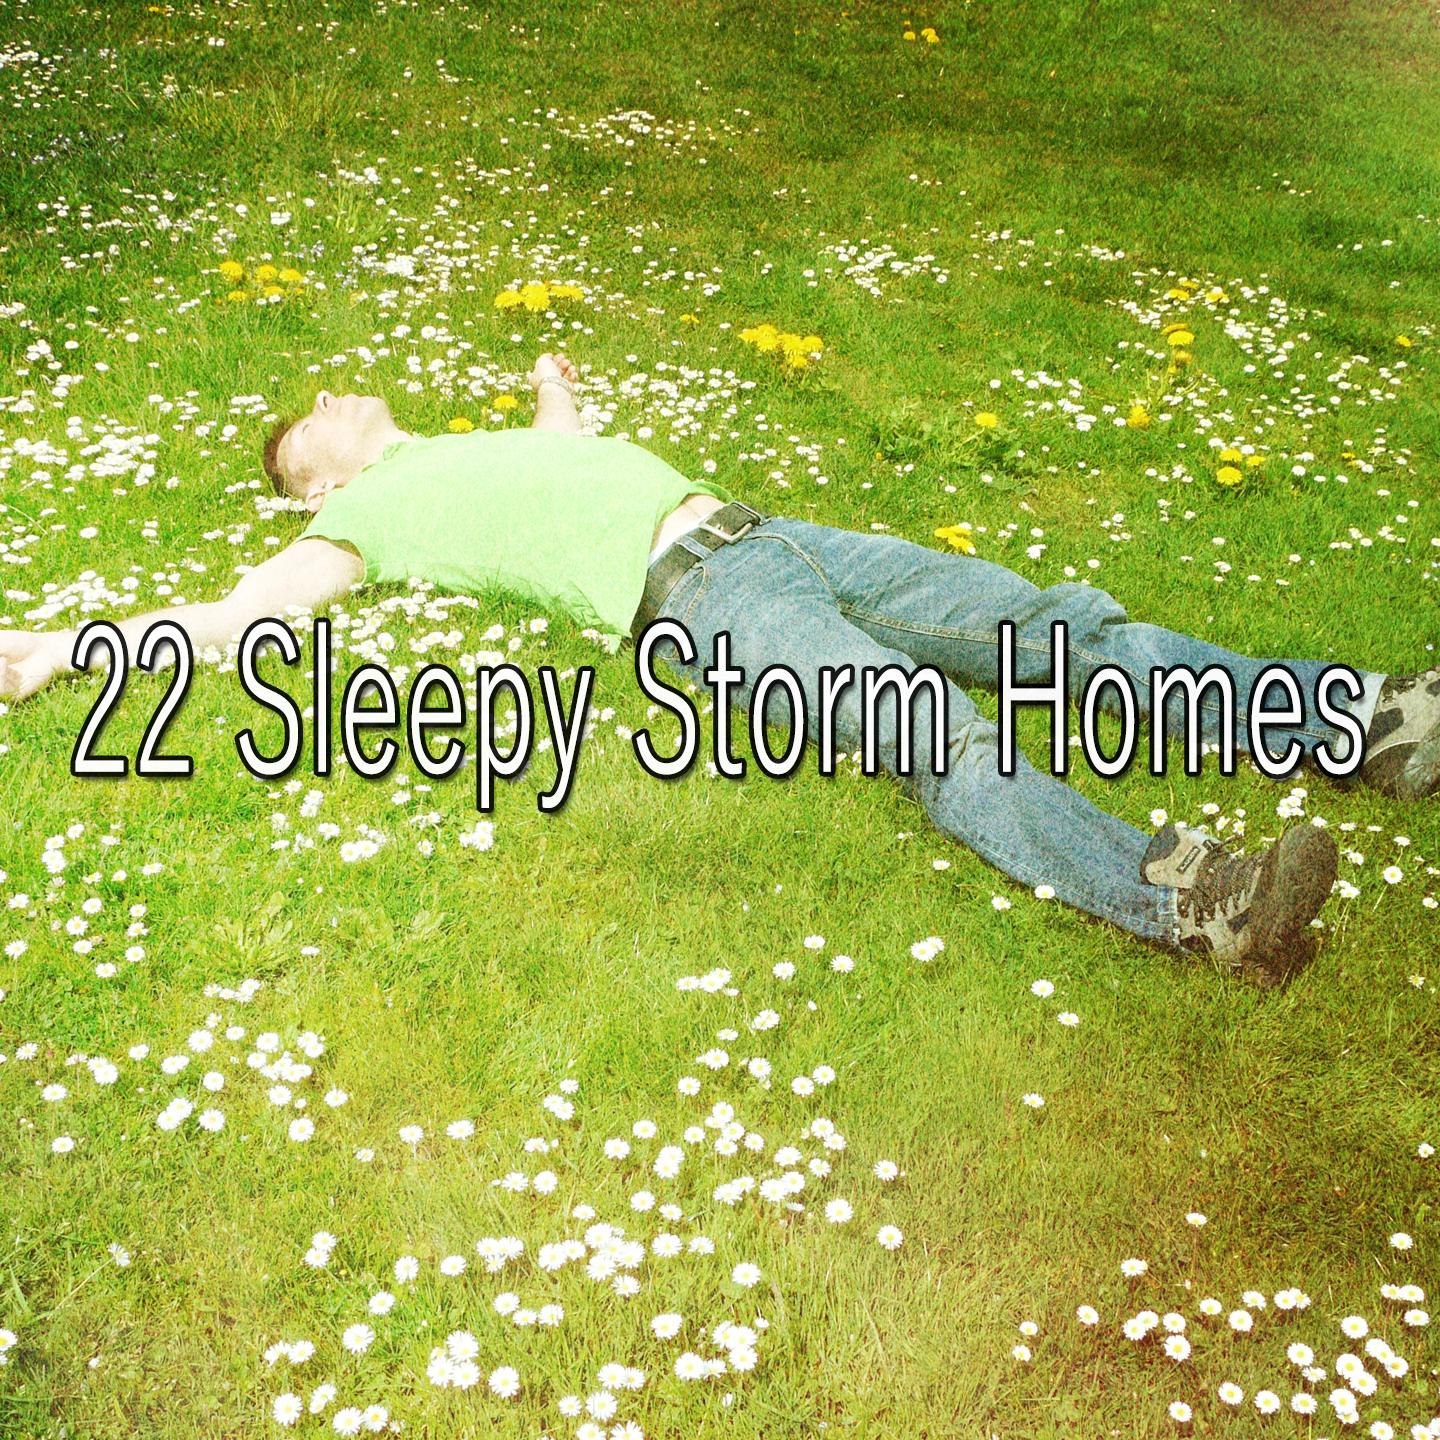 22 Sleepy Storm Homes